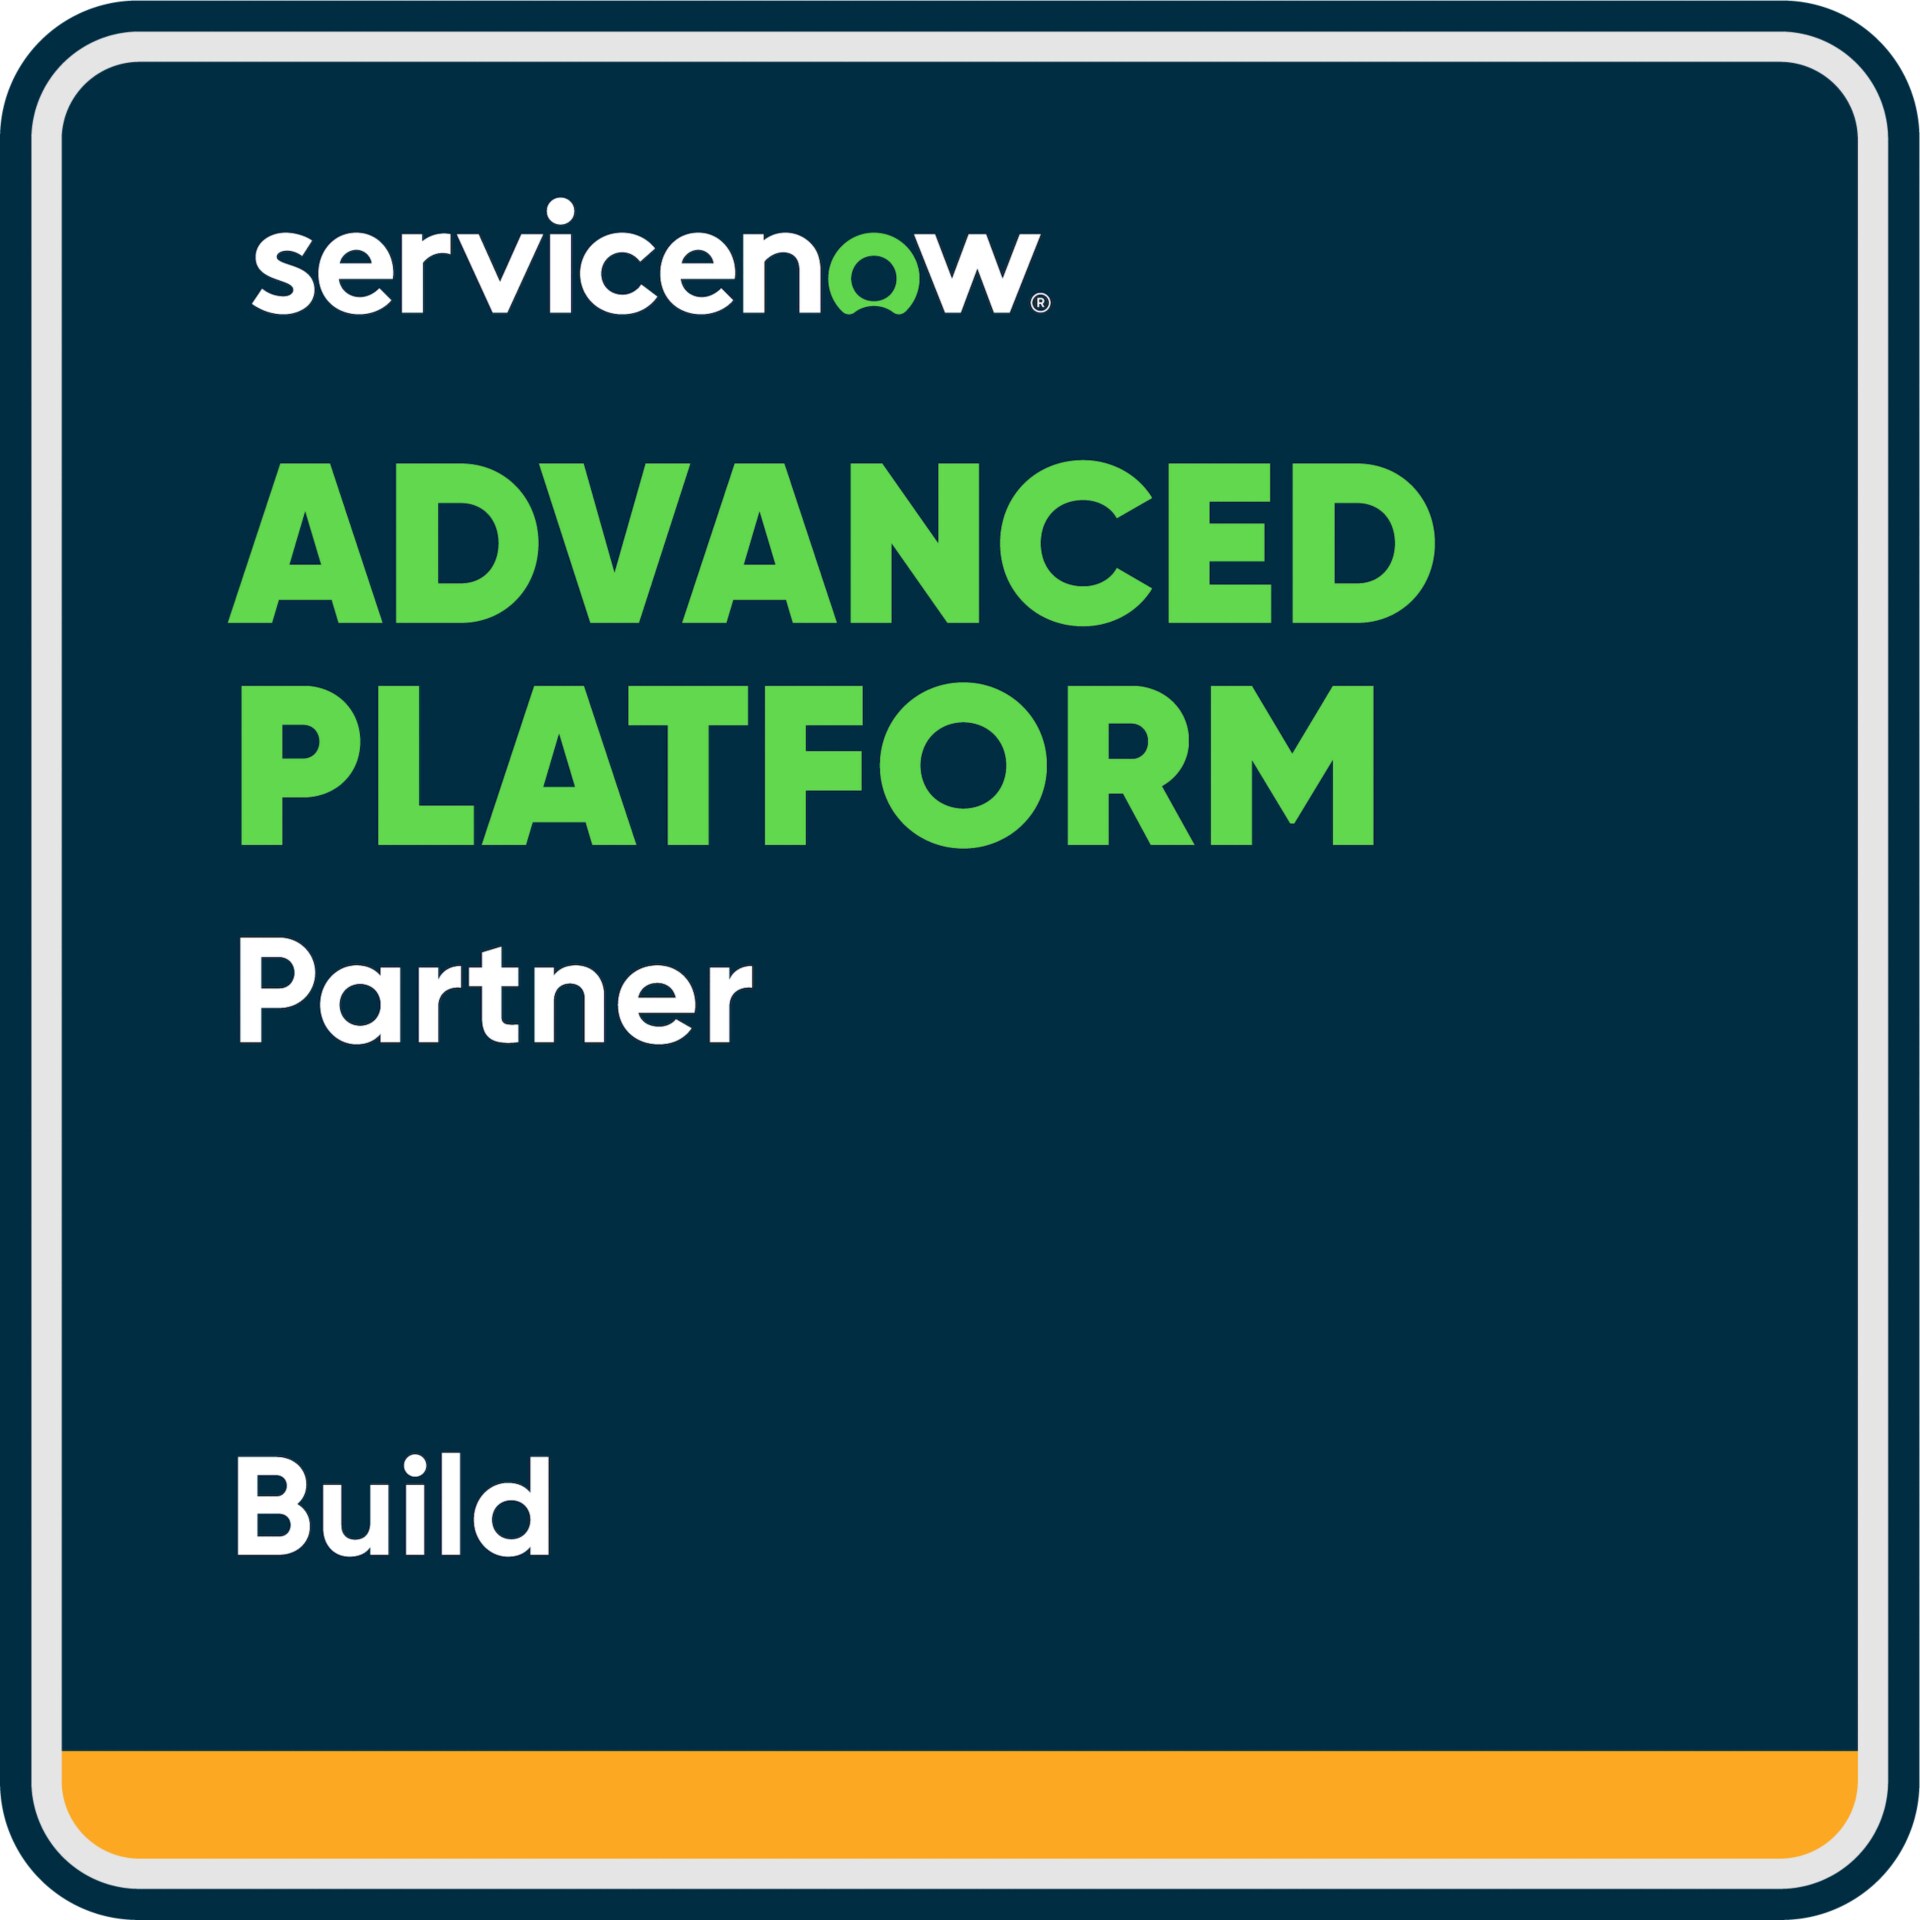 ServiceNow Advance Platform Partner Build badge